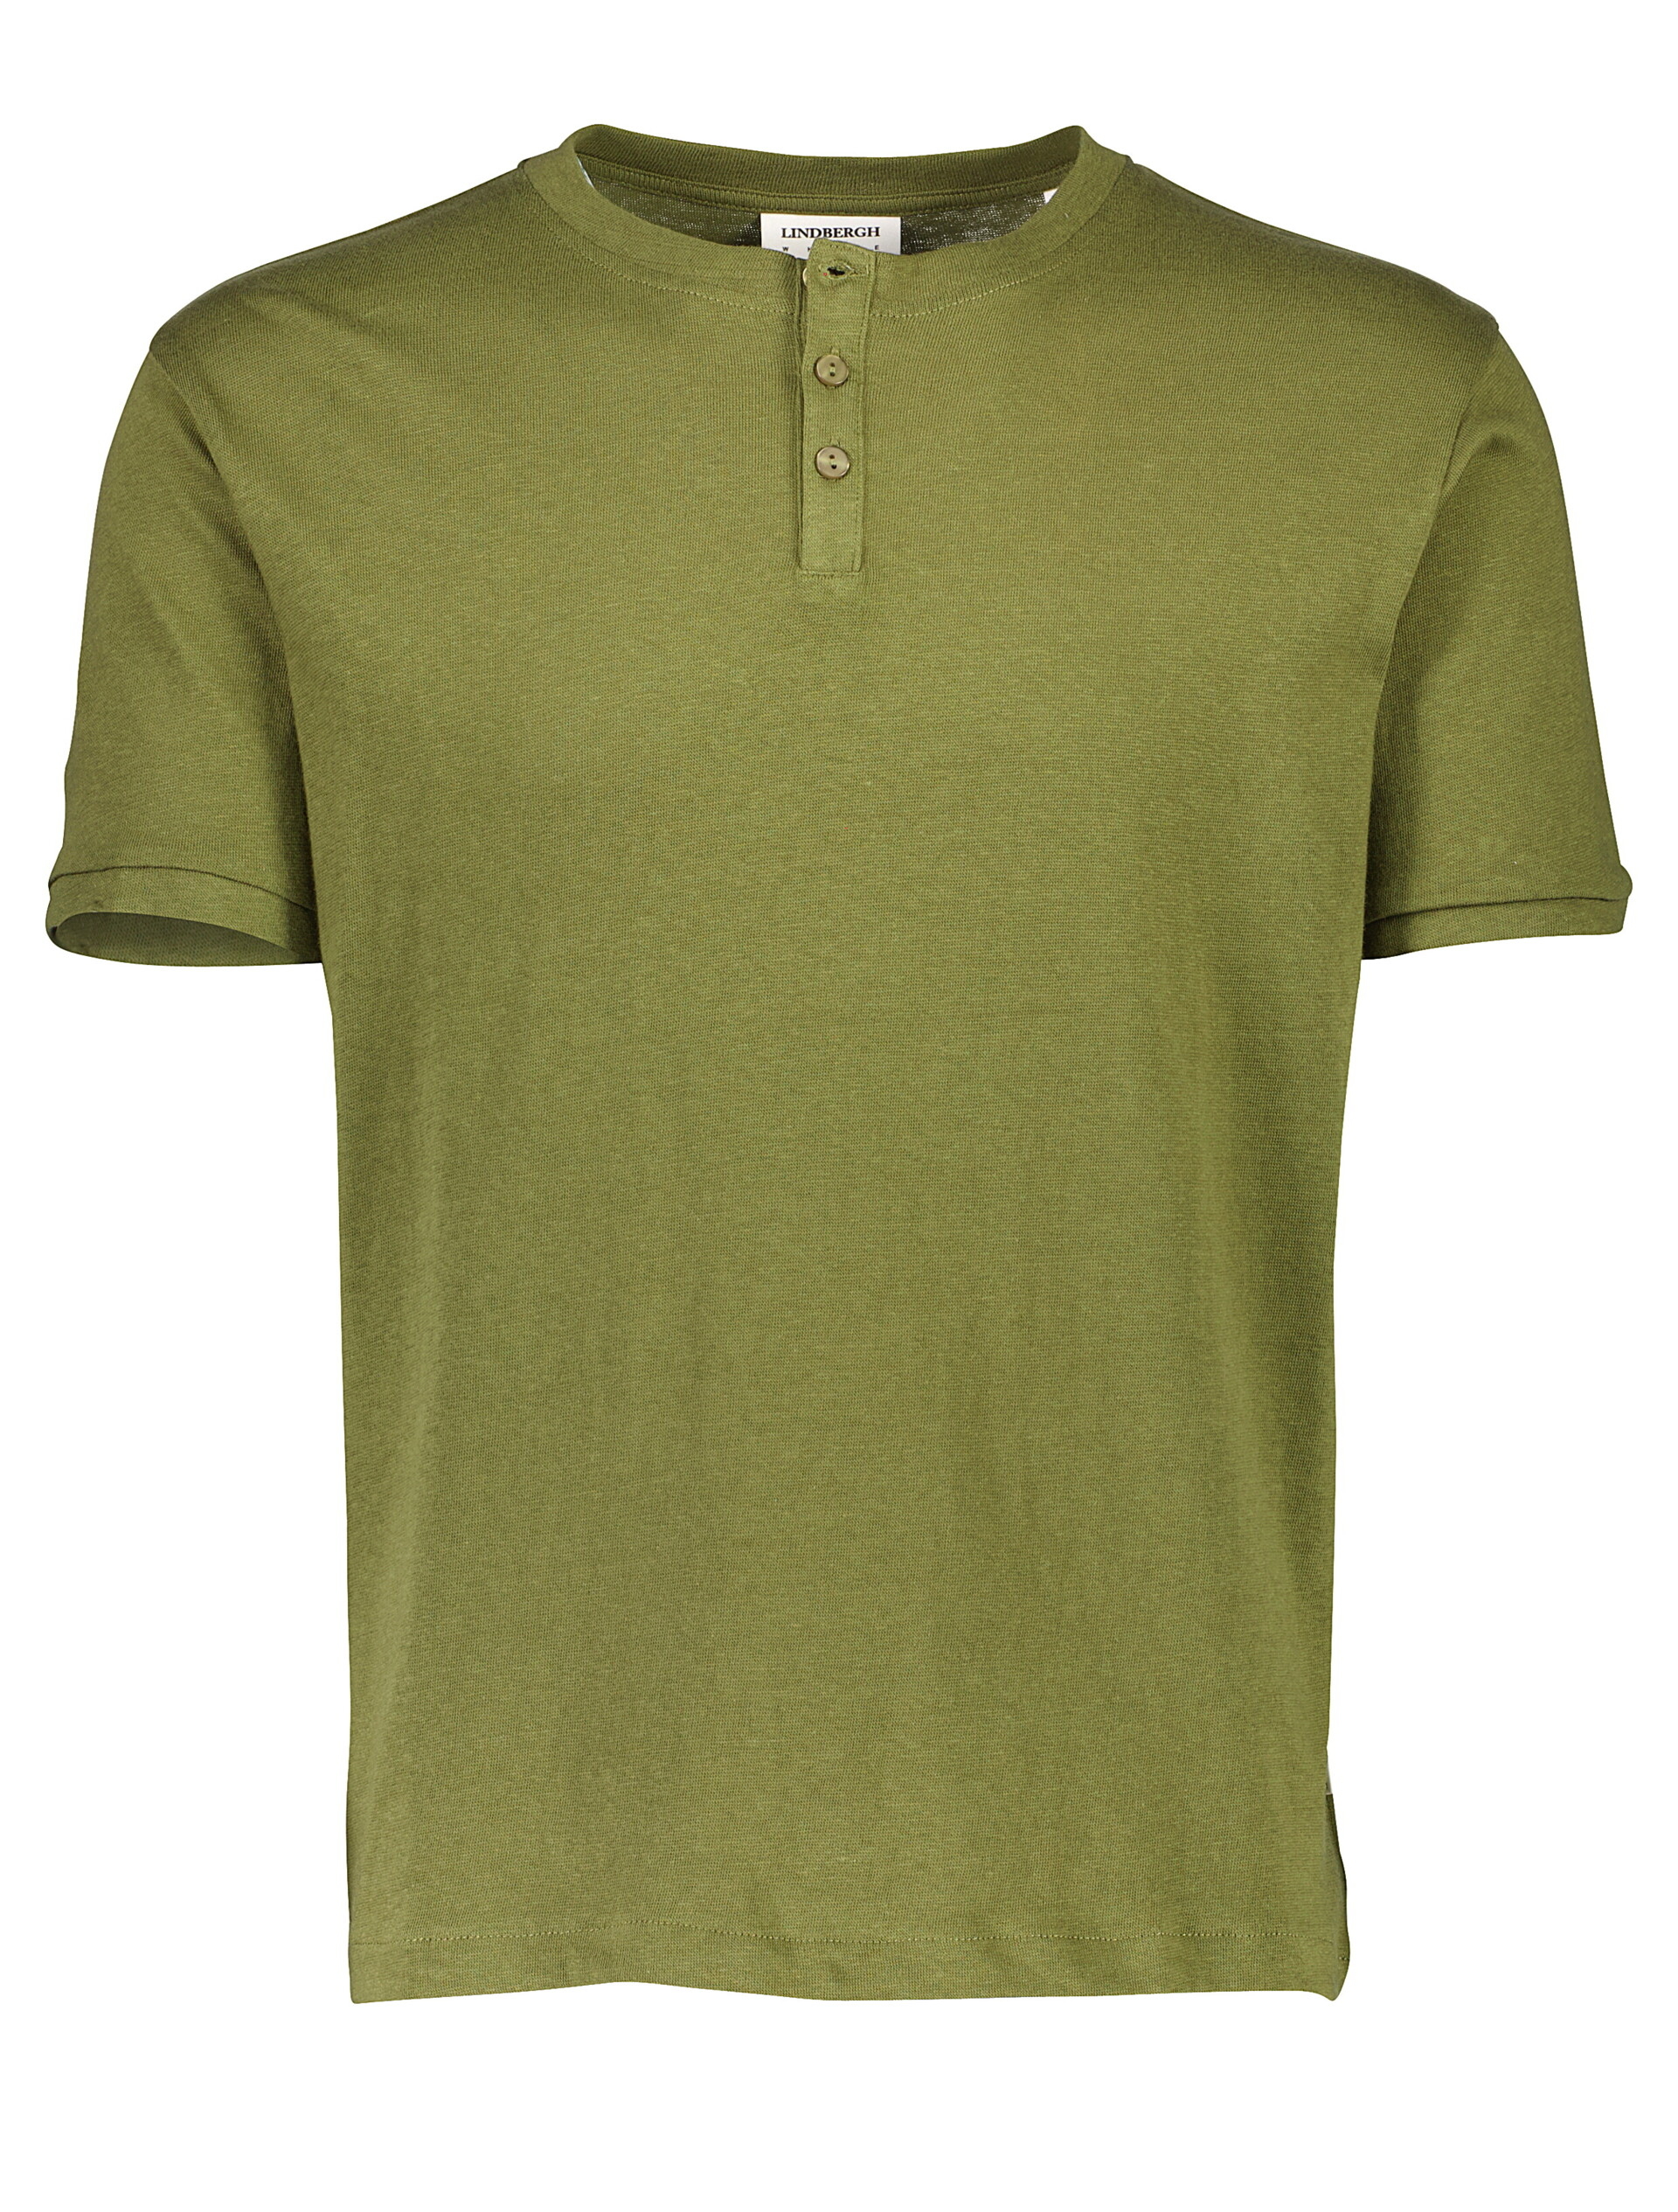 Lindbergh Henley shirt groen / army